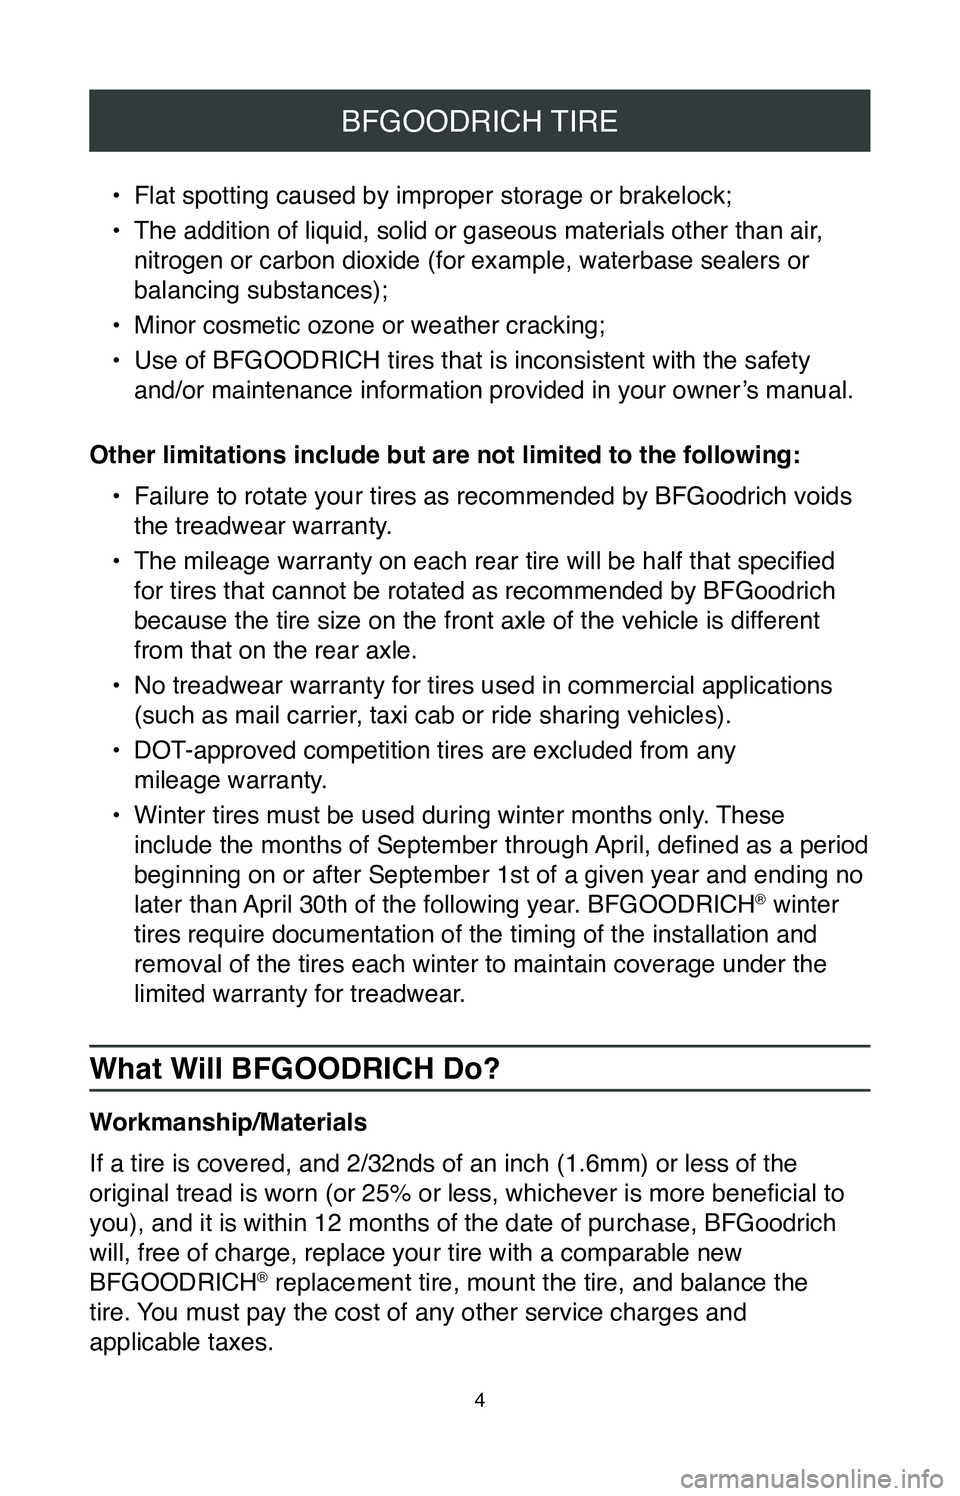 TOYOTA LAND CRUISER 2020  Warranties & Maintenance Guides (in English) 4
BFGOODRICH TIRE
